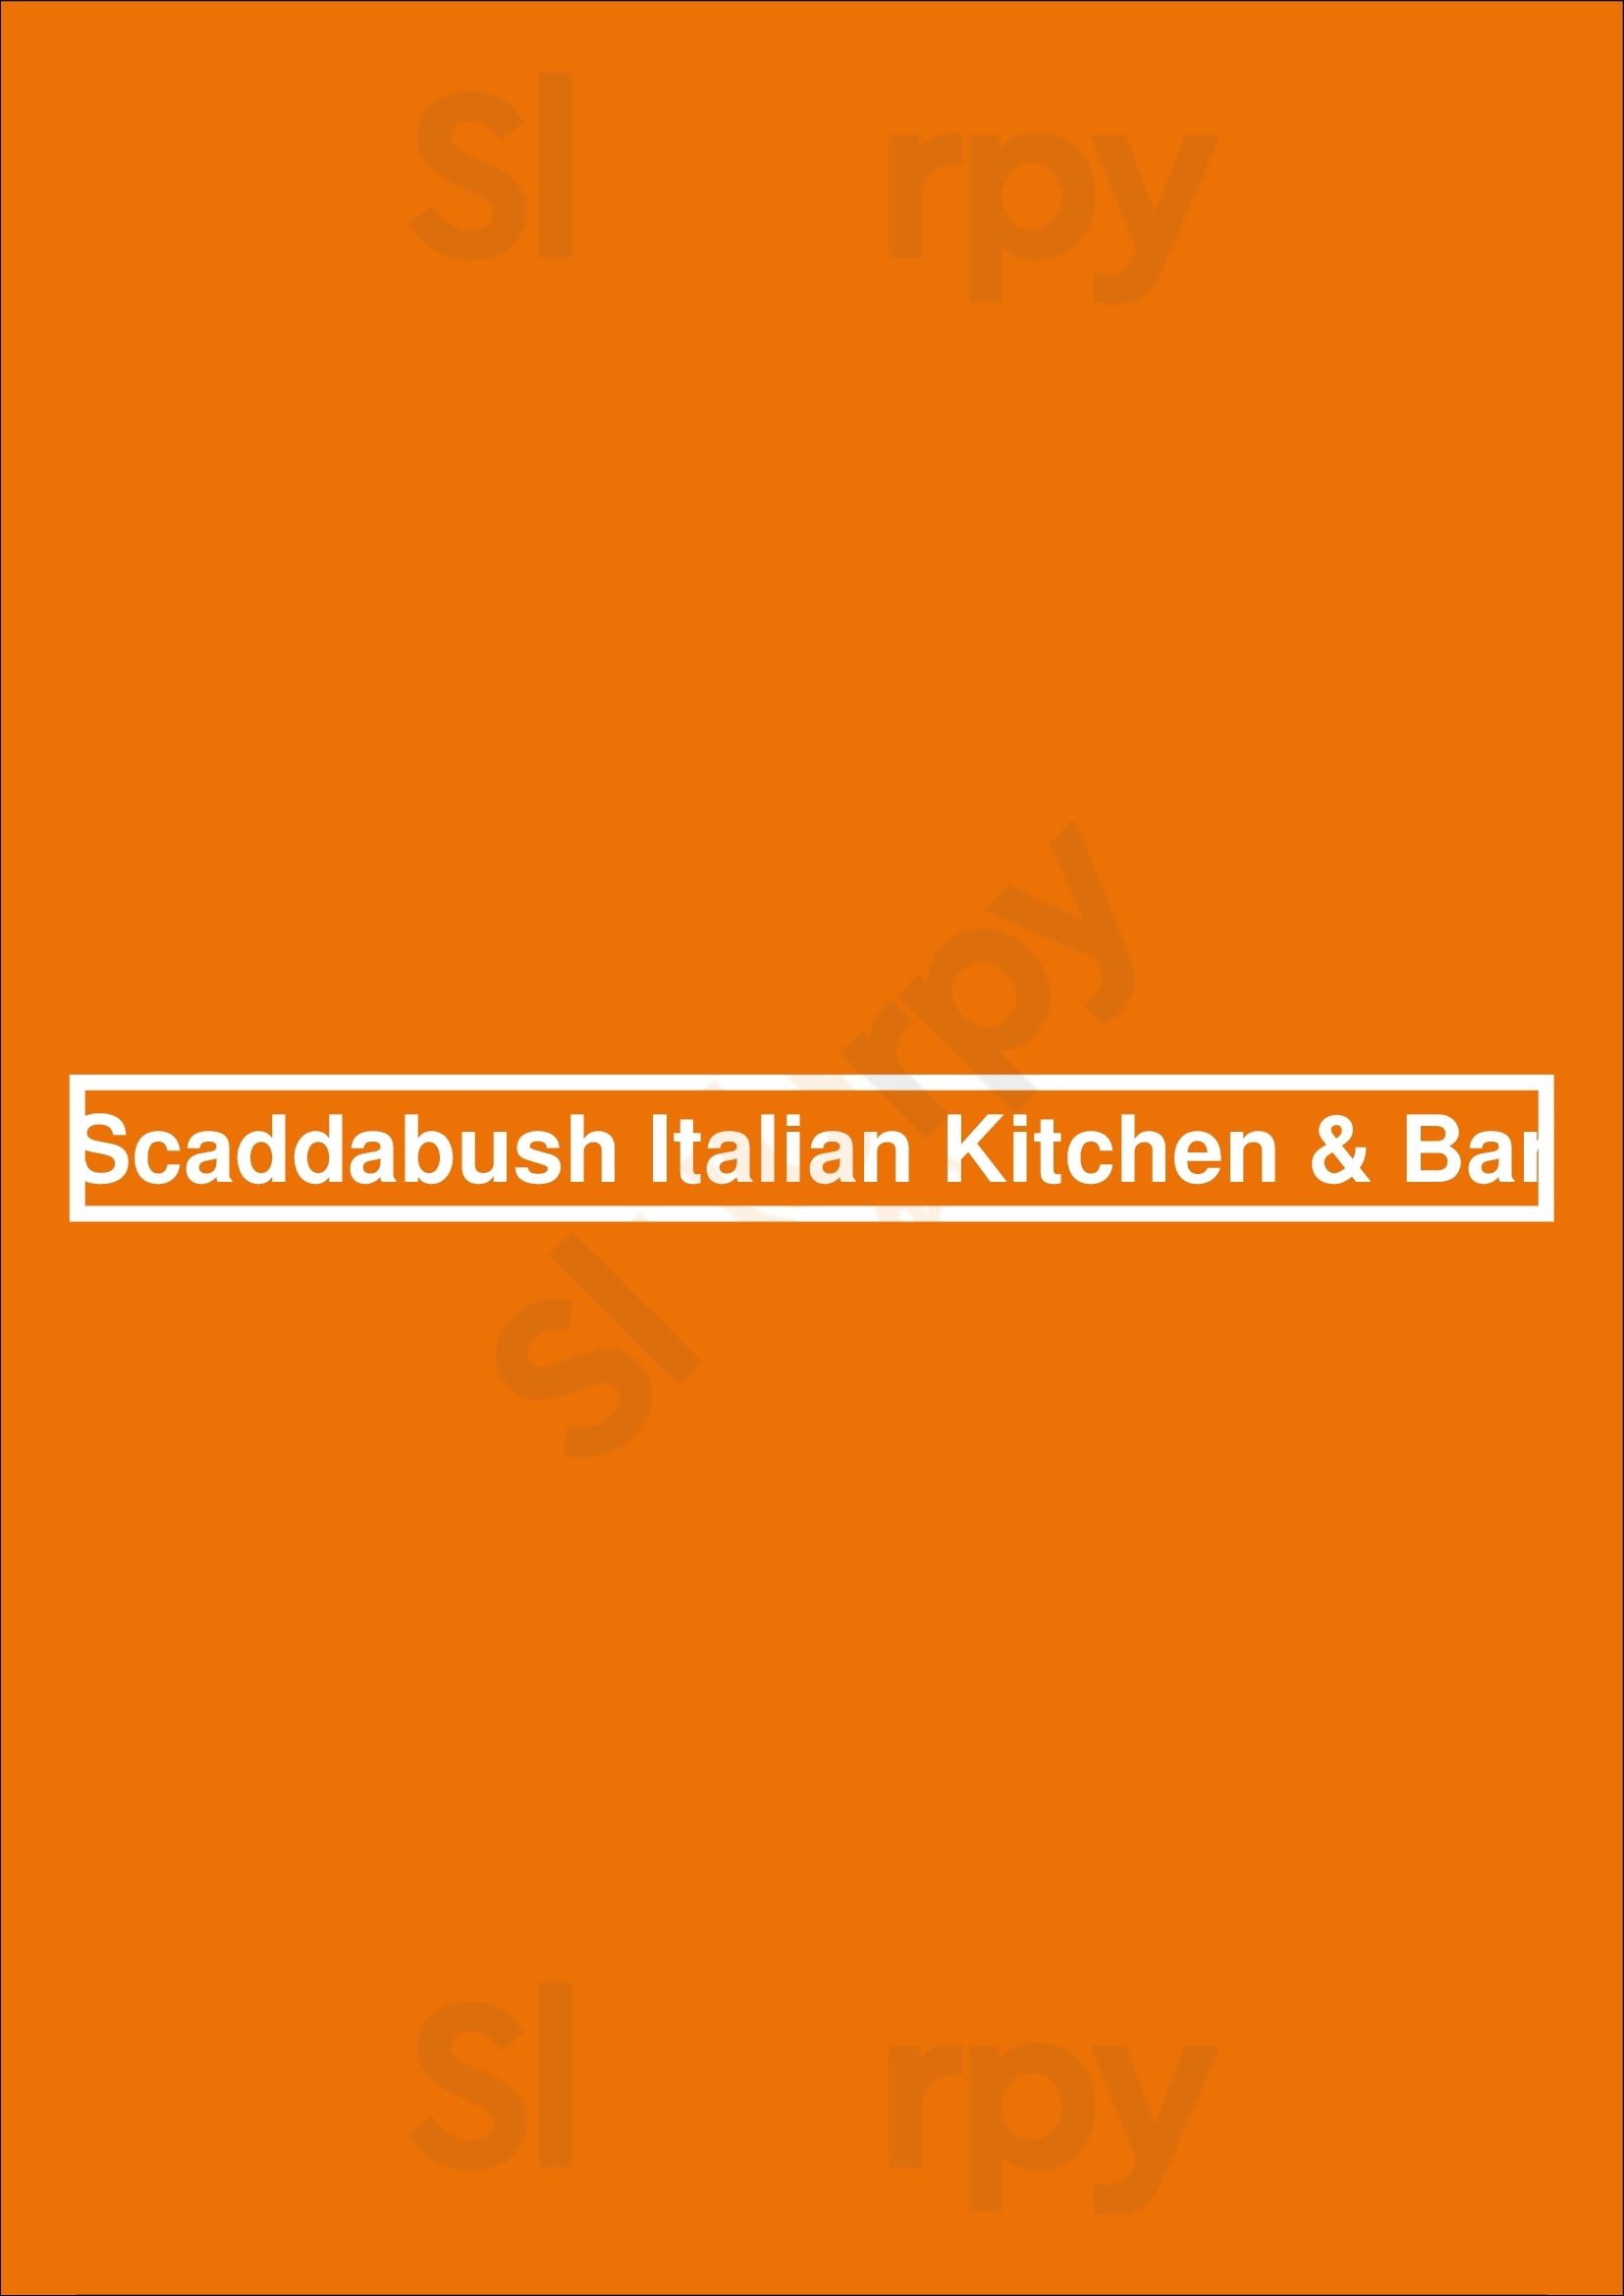 Scaddabush Italian Kitchen & Bar Woodbridge Menu - 1